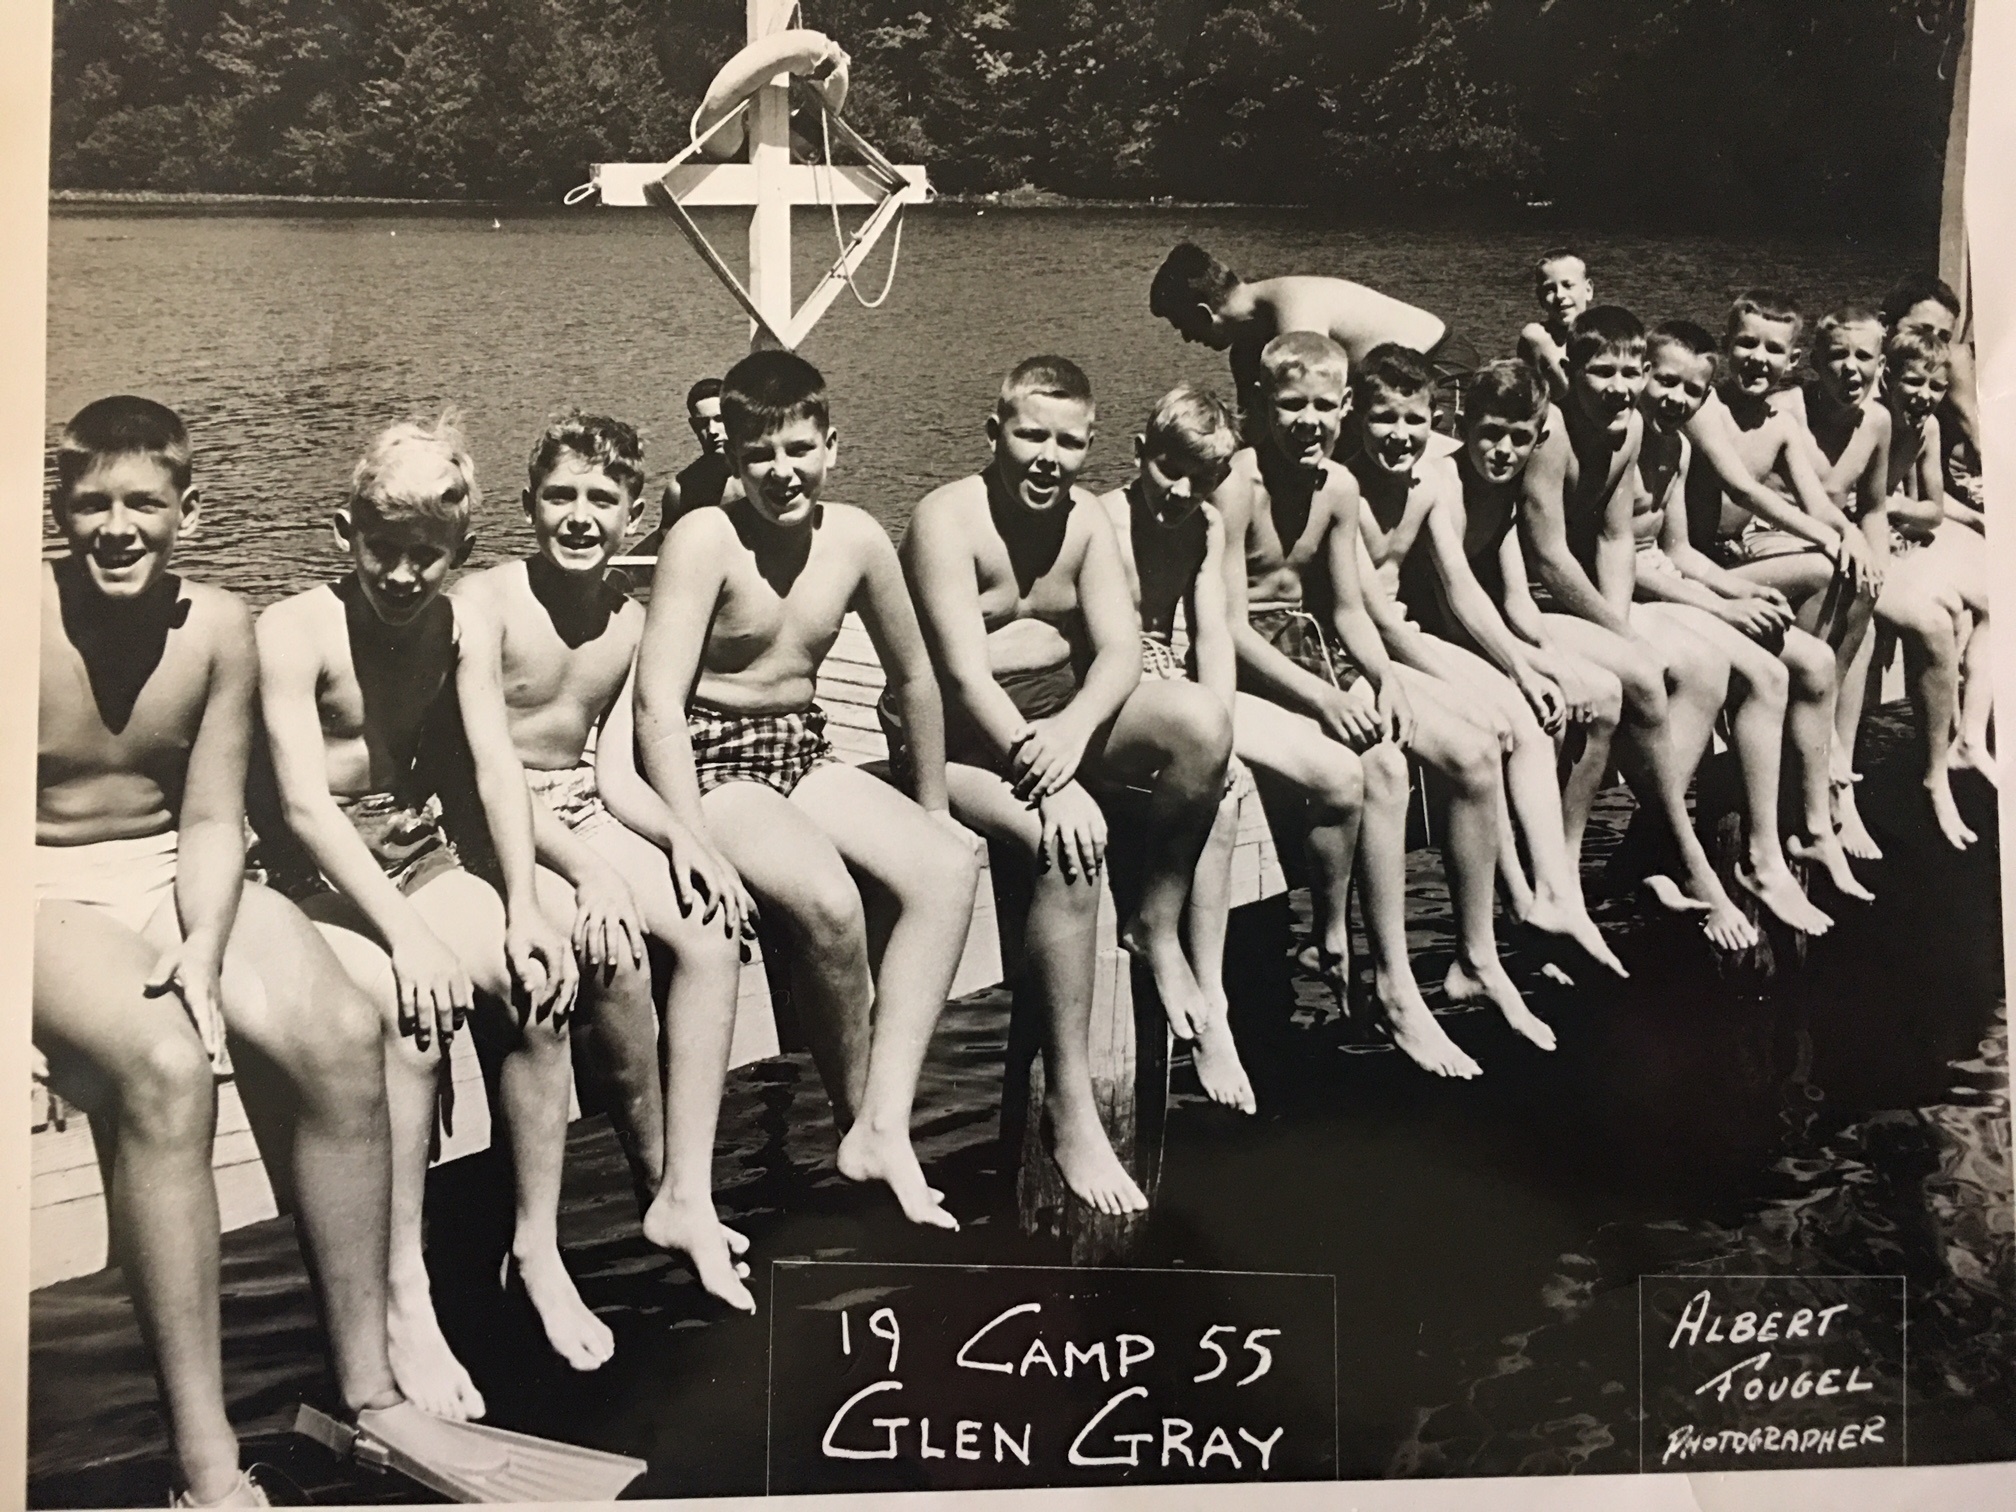 Glen Gray WAterfront 1955